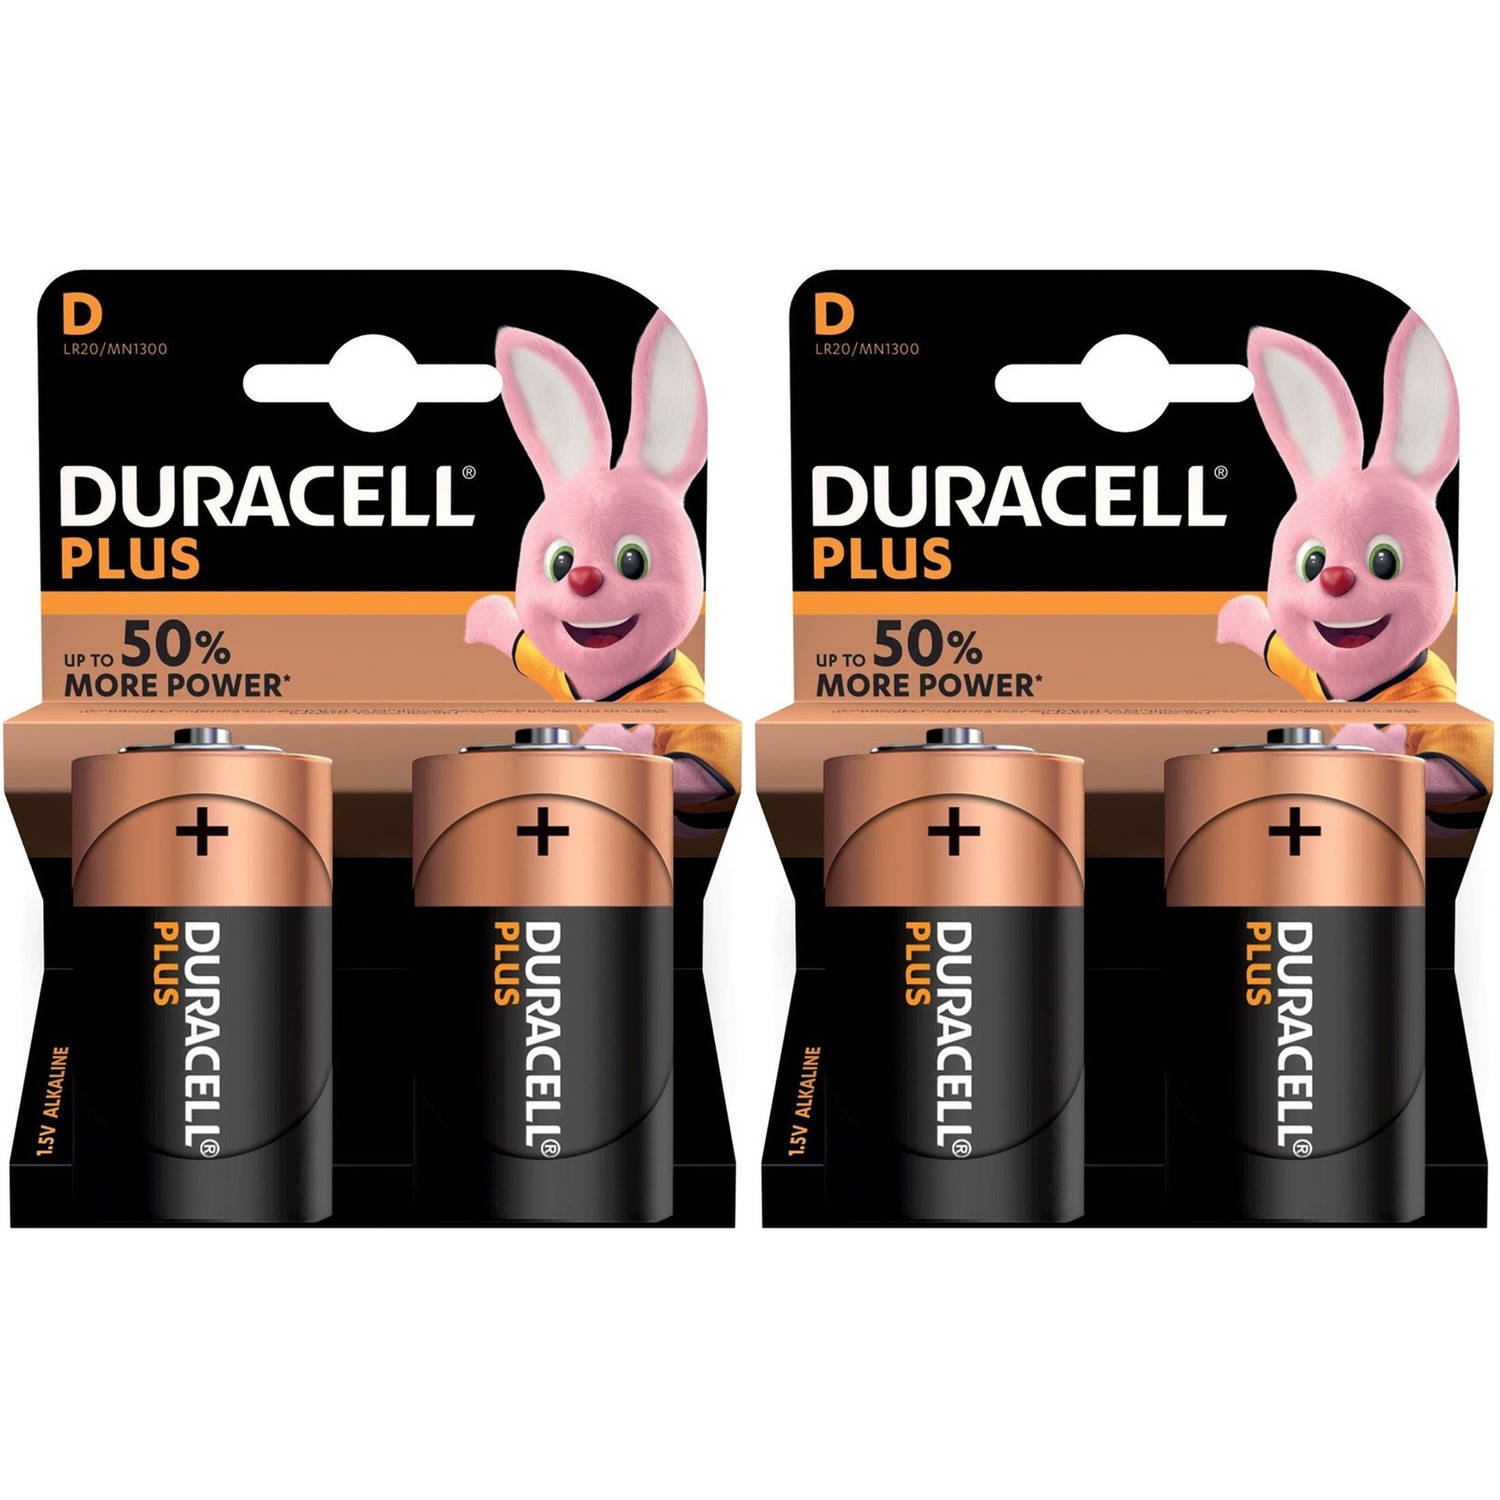 Set van 4x Duracell D Plus alkaline batterijen LR20 MN1300 1.5 V - Batterijen